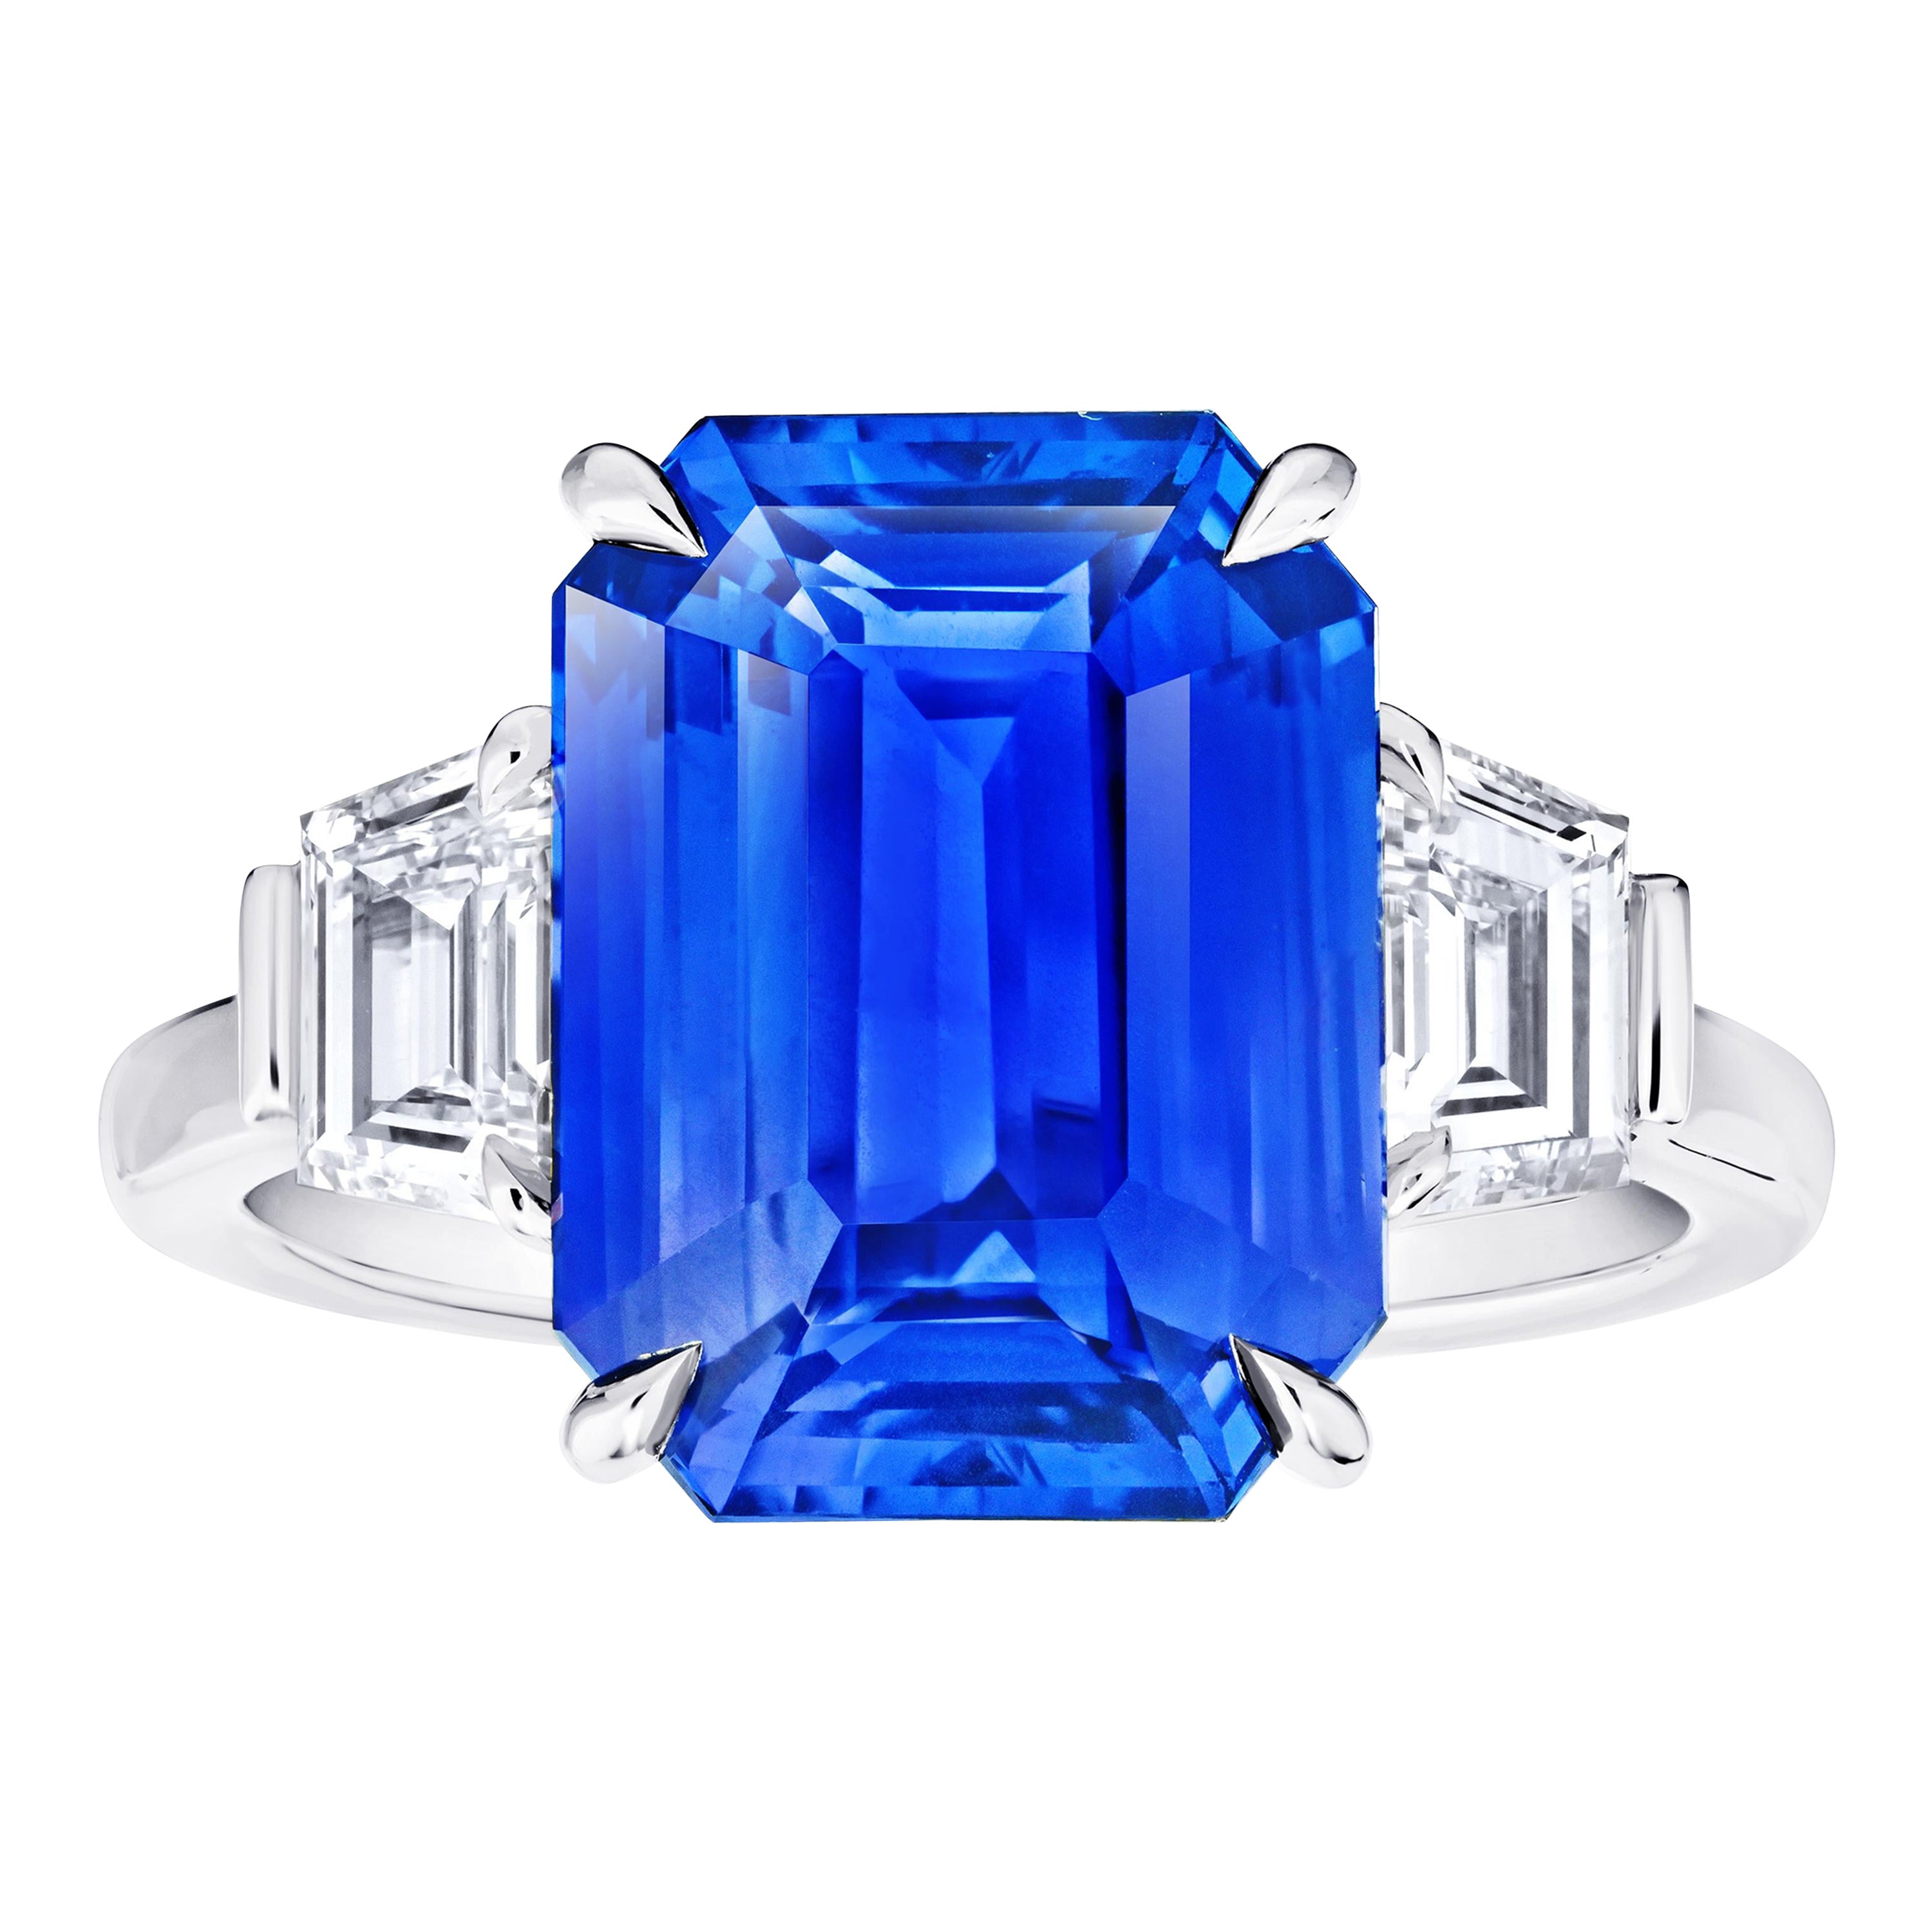 Bague en platine avec saphir bleu émeraude de 6.60 carats et diamants